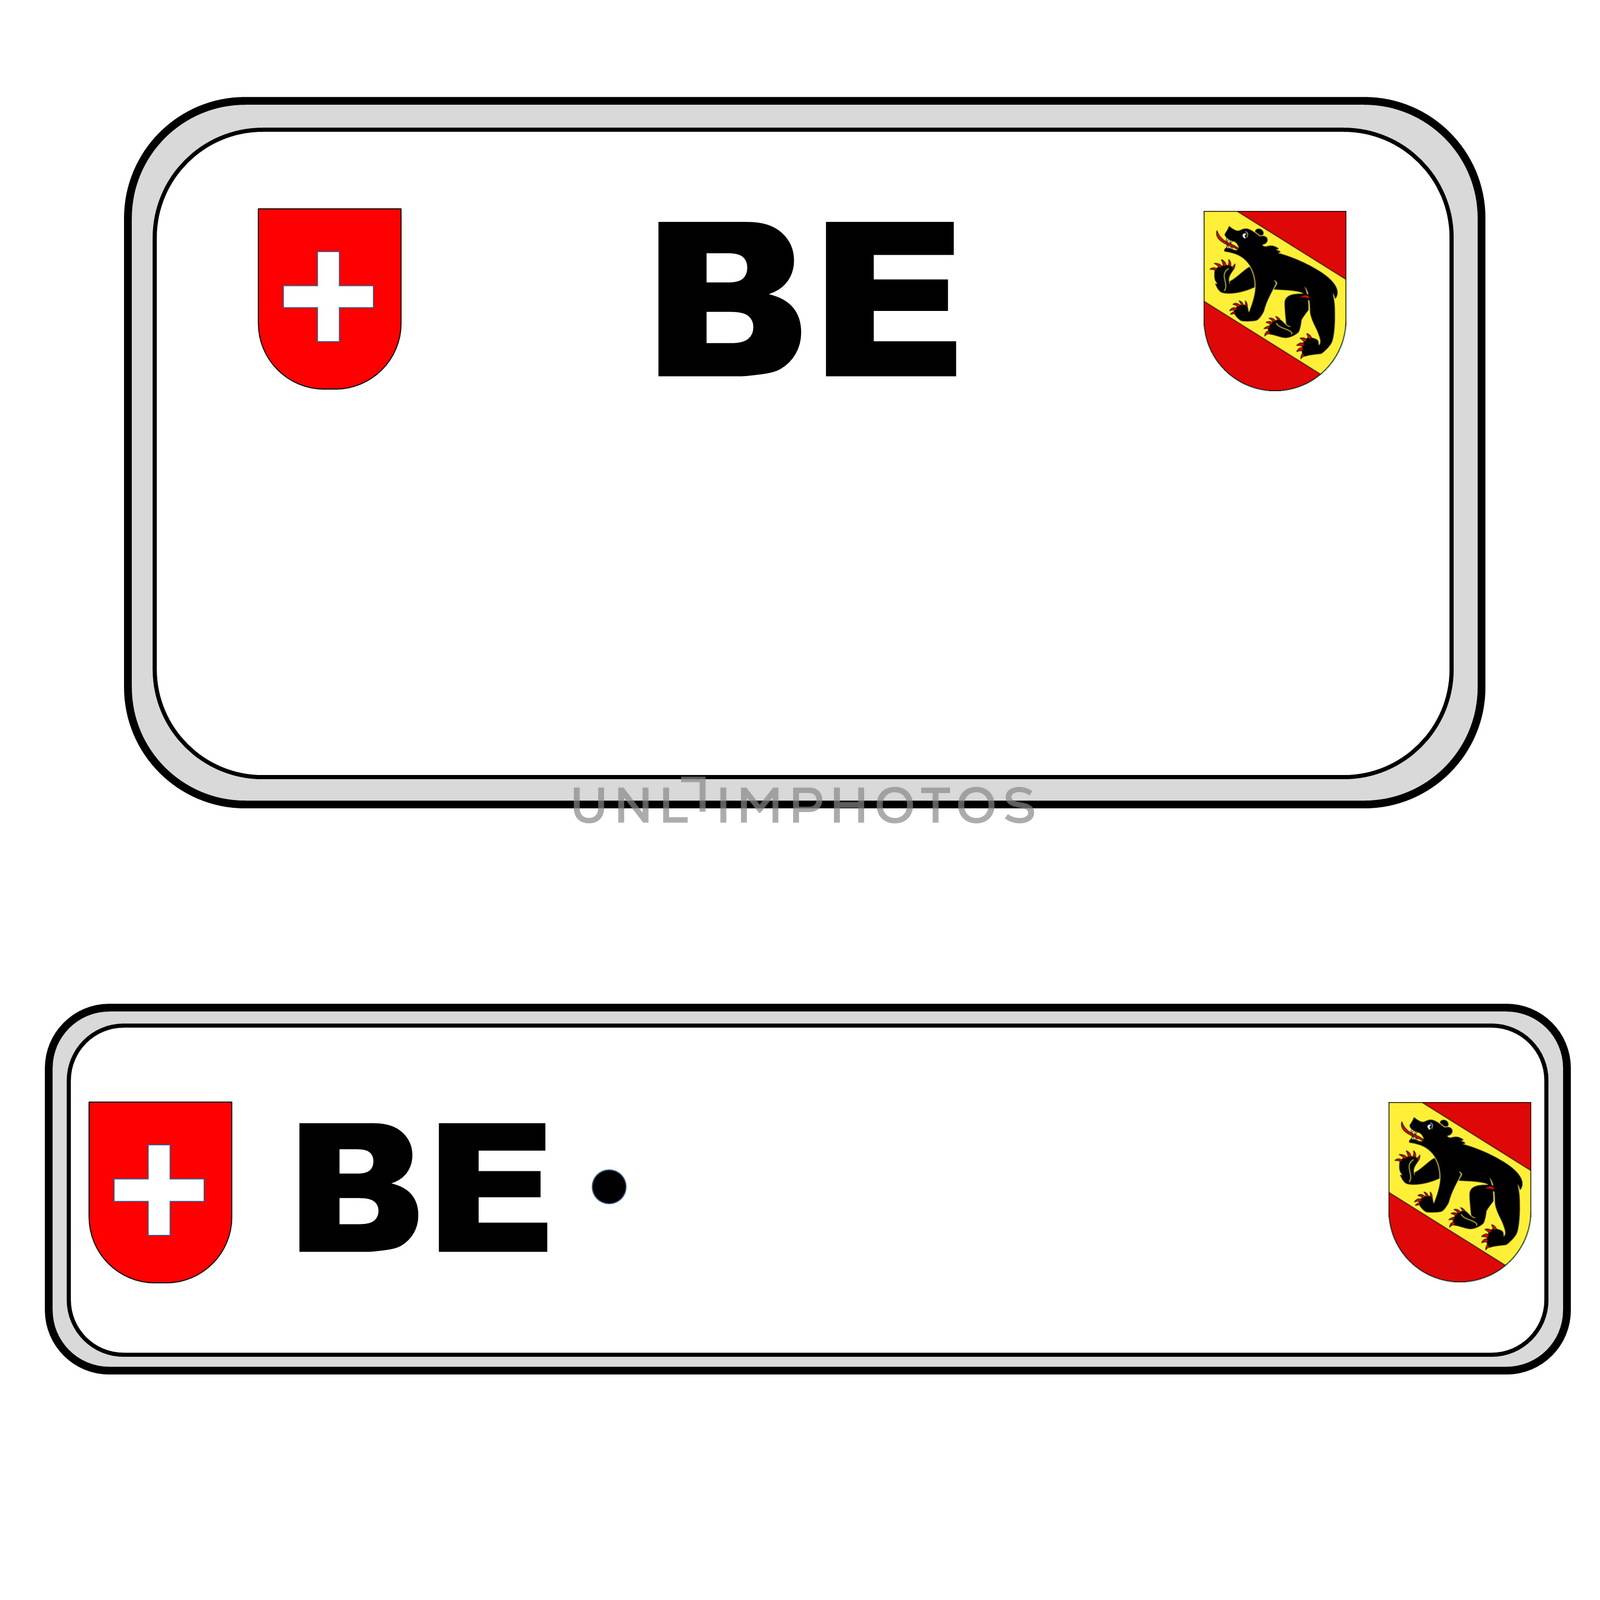 Bernese plate number, Switzerland by Elenaphotos21